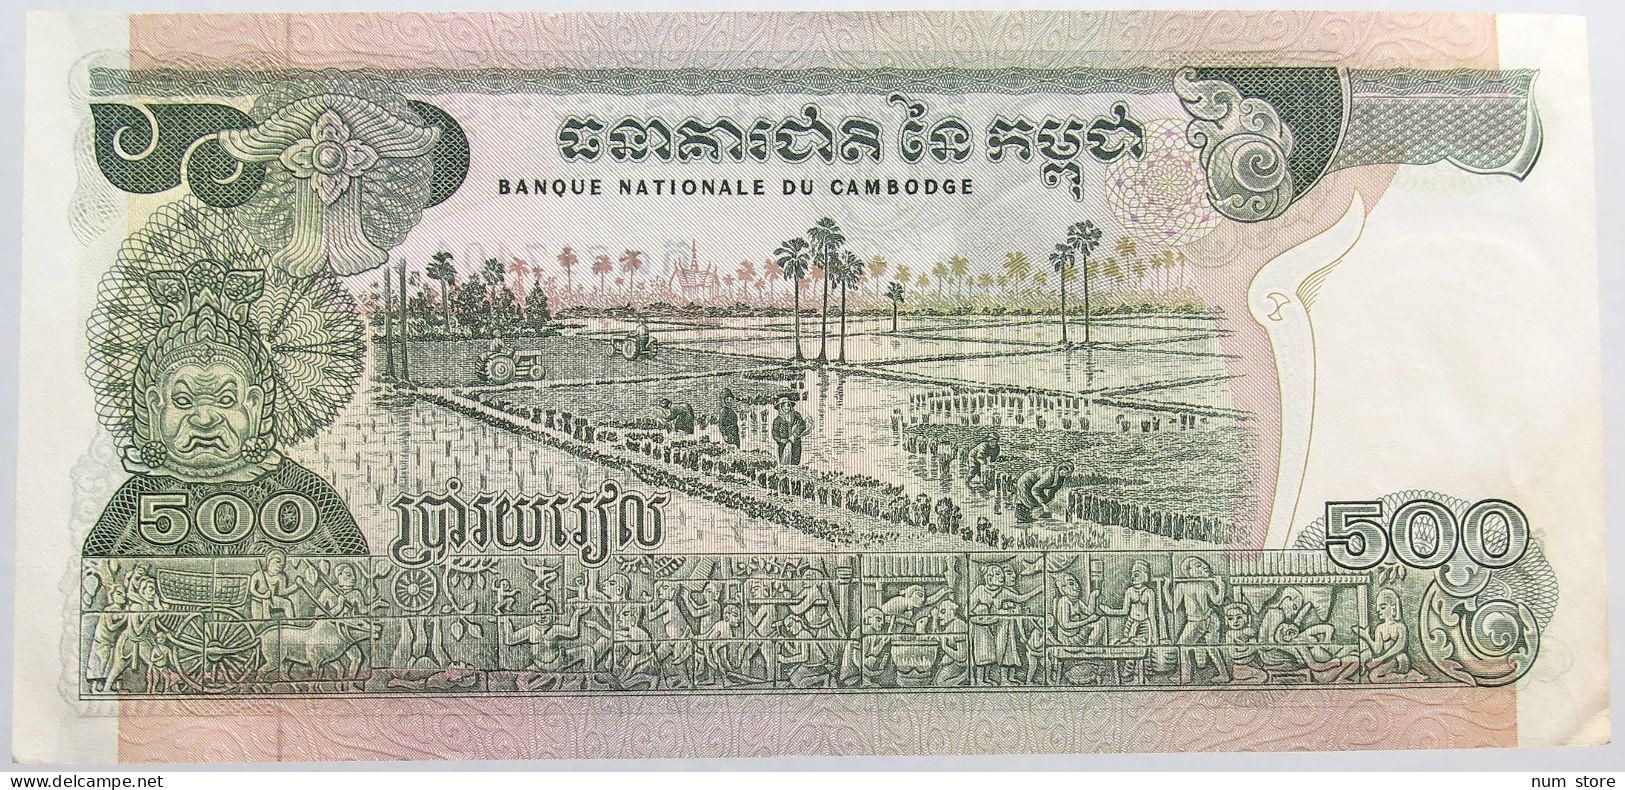 BURMA 500 RIELS #alb014 0155 - Myanmar